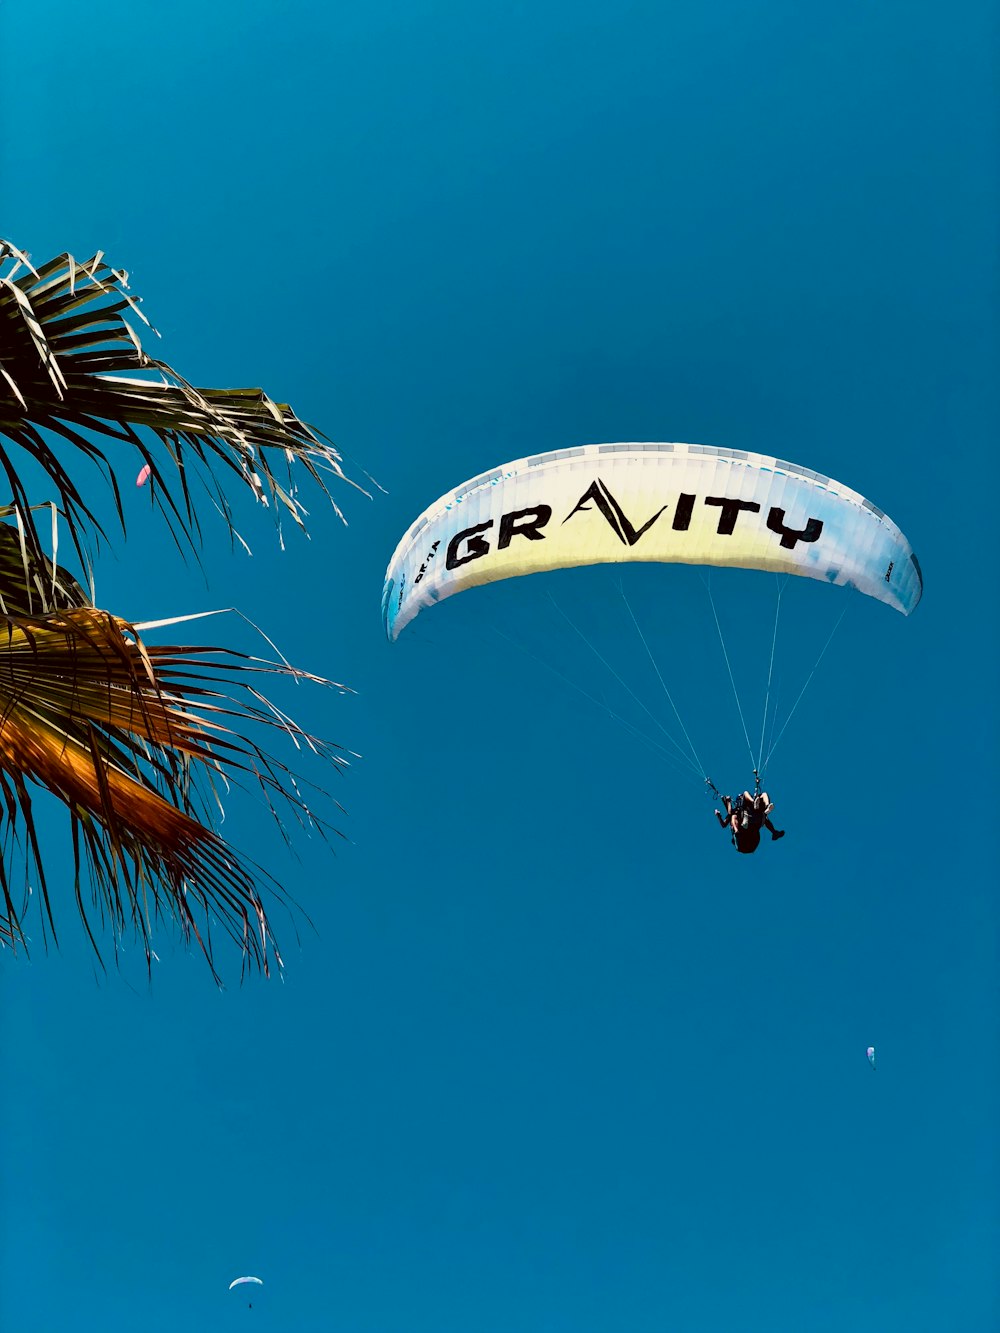 people riding parachute during daytime